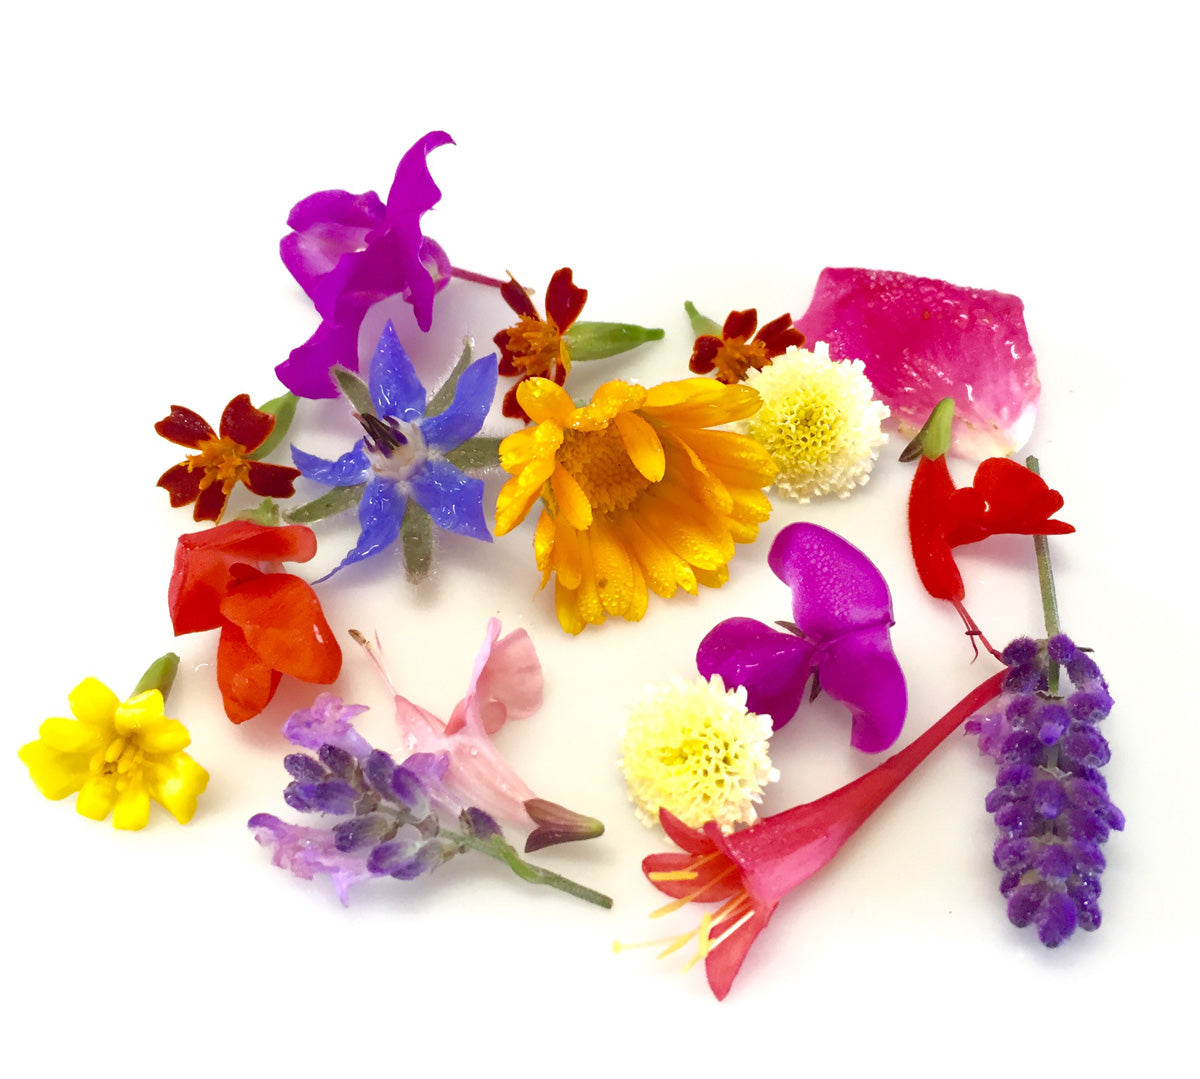 Edible Flower Mix • بذور زهور قابلة للأكل - plantnmore